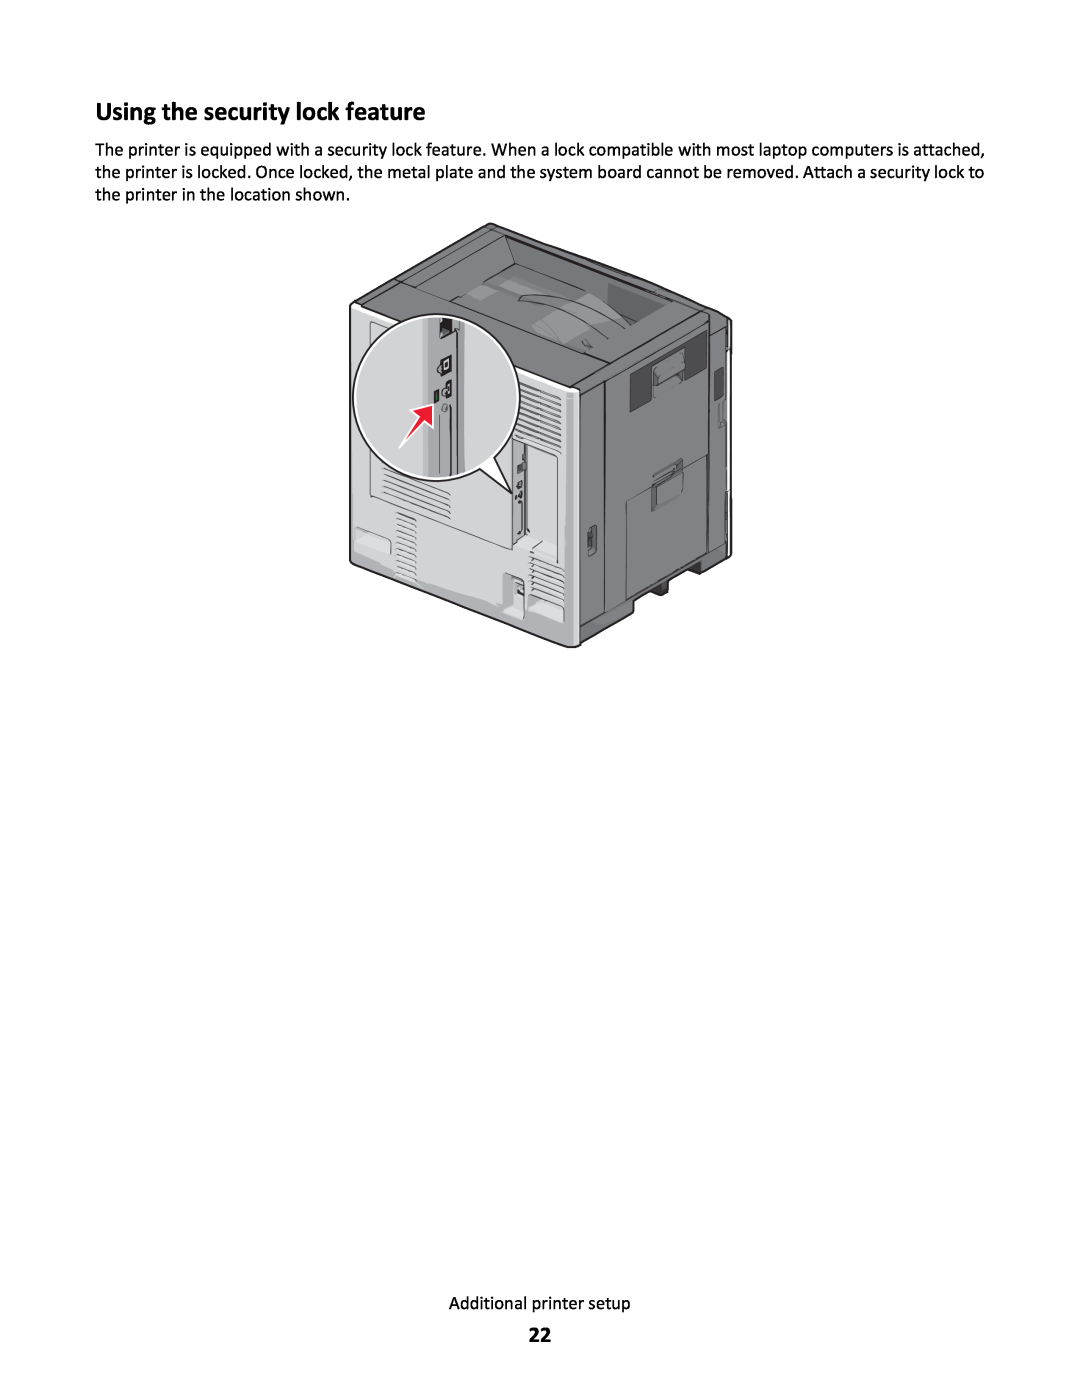 Lexmark C790 manual Using the security lock feature, Additional printer setup 